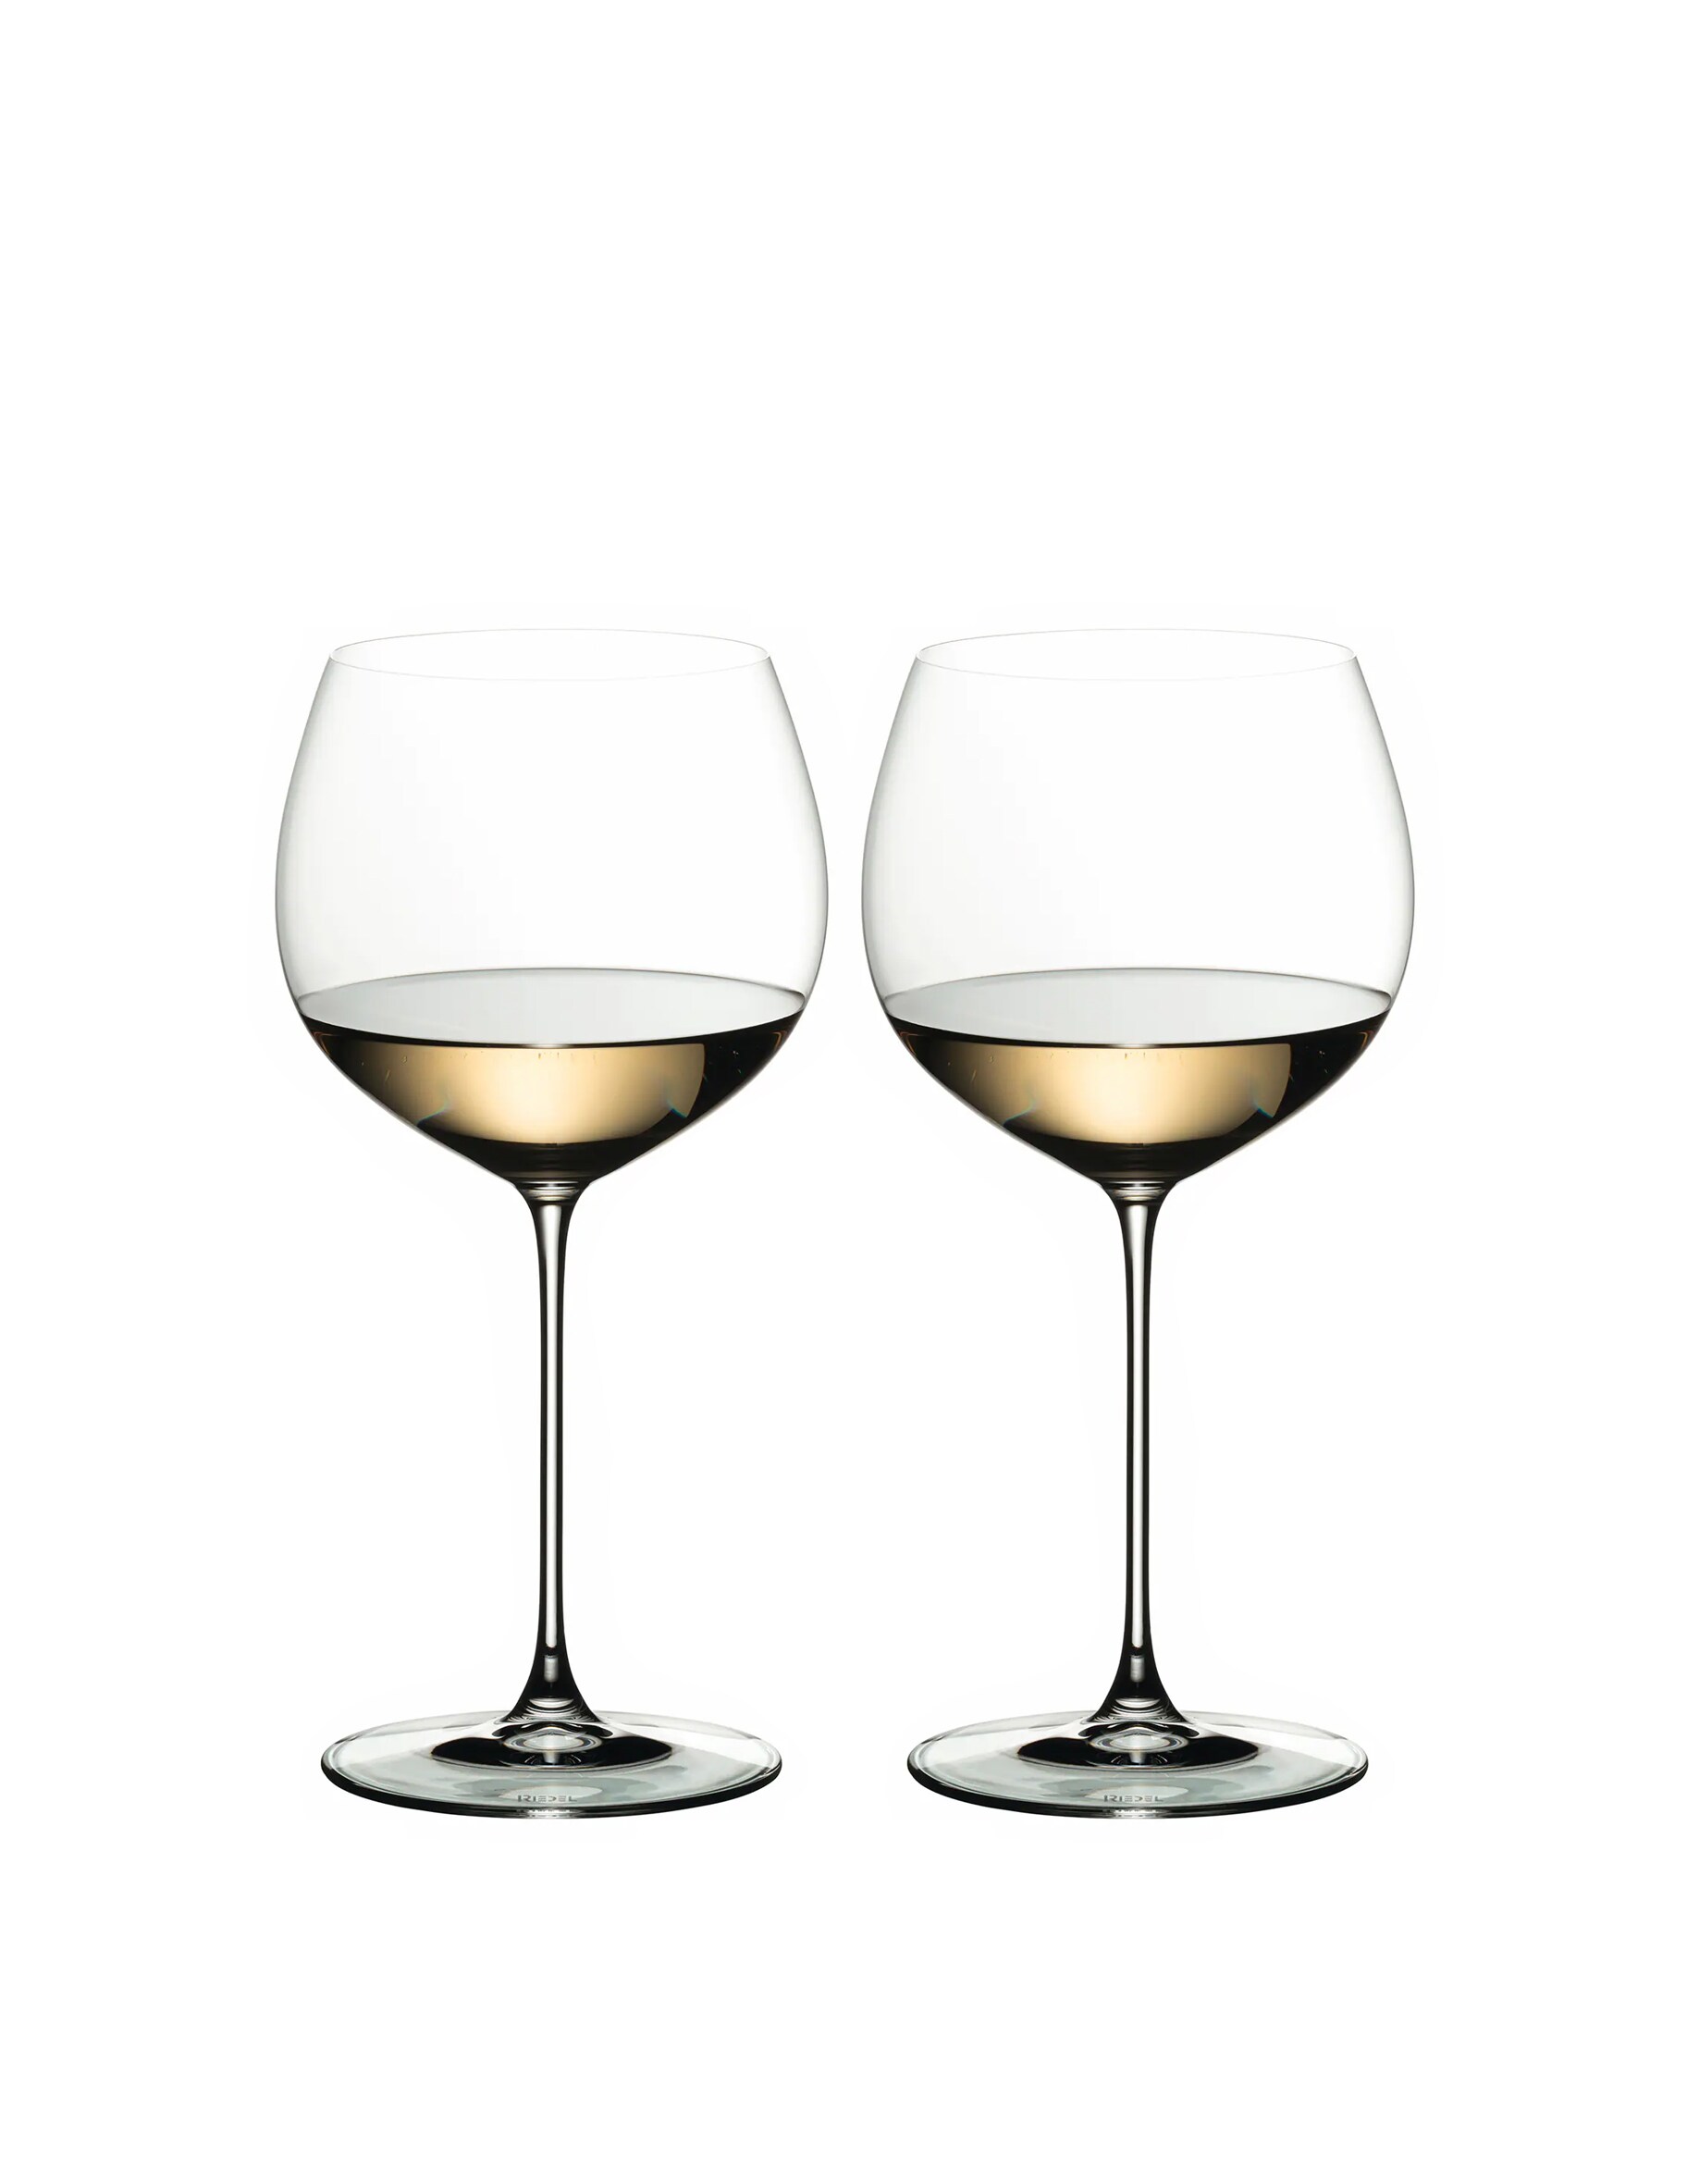 Набор из 2 бокалов Veritas Oaked Chardonnay Riedel riedel veritas oaked chardonnay 2 glasses set